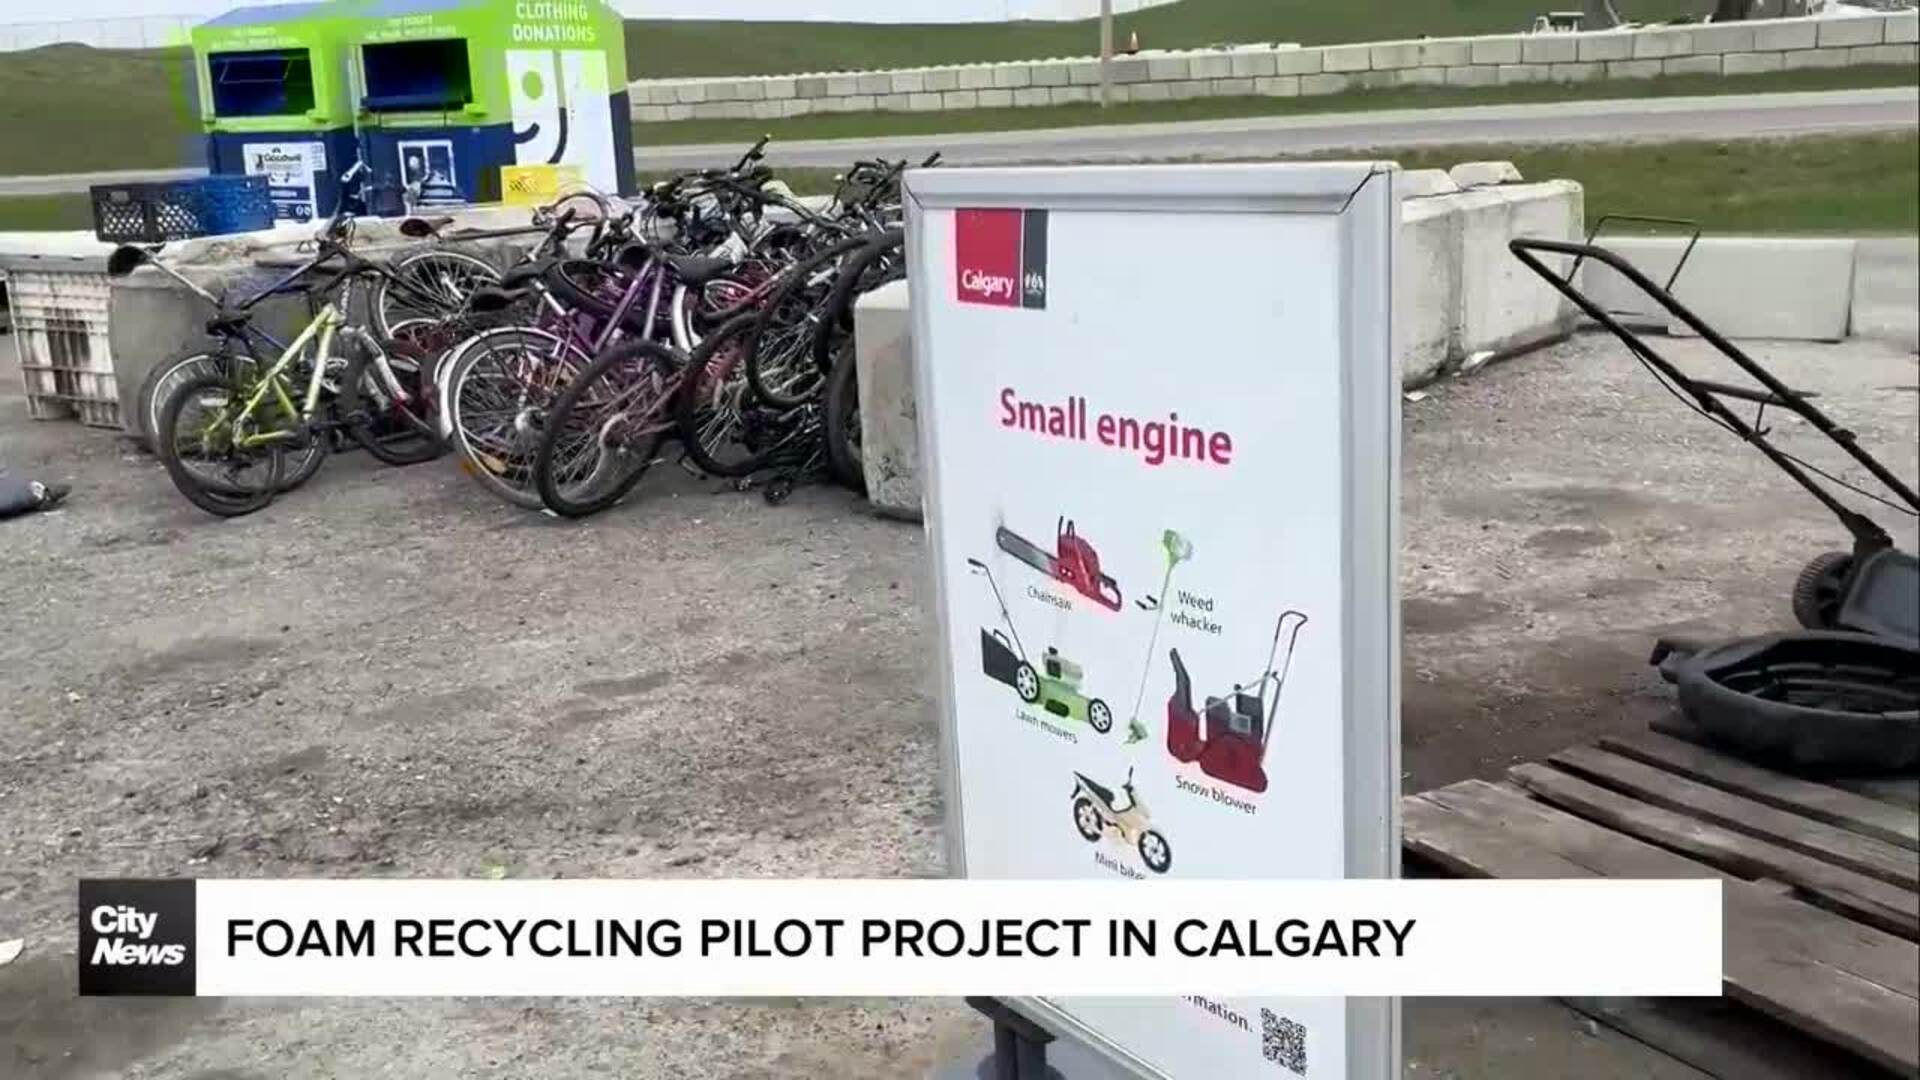 Foam recycling pilot project in Calgary